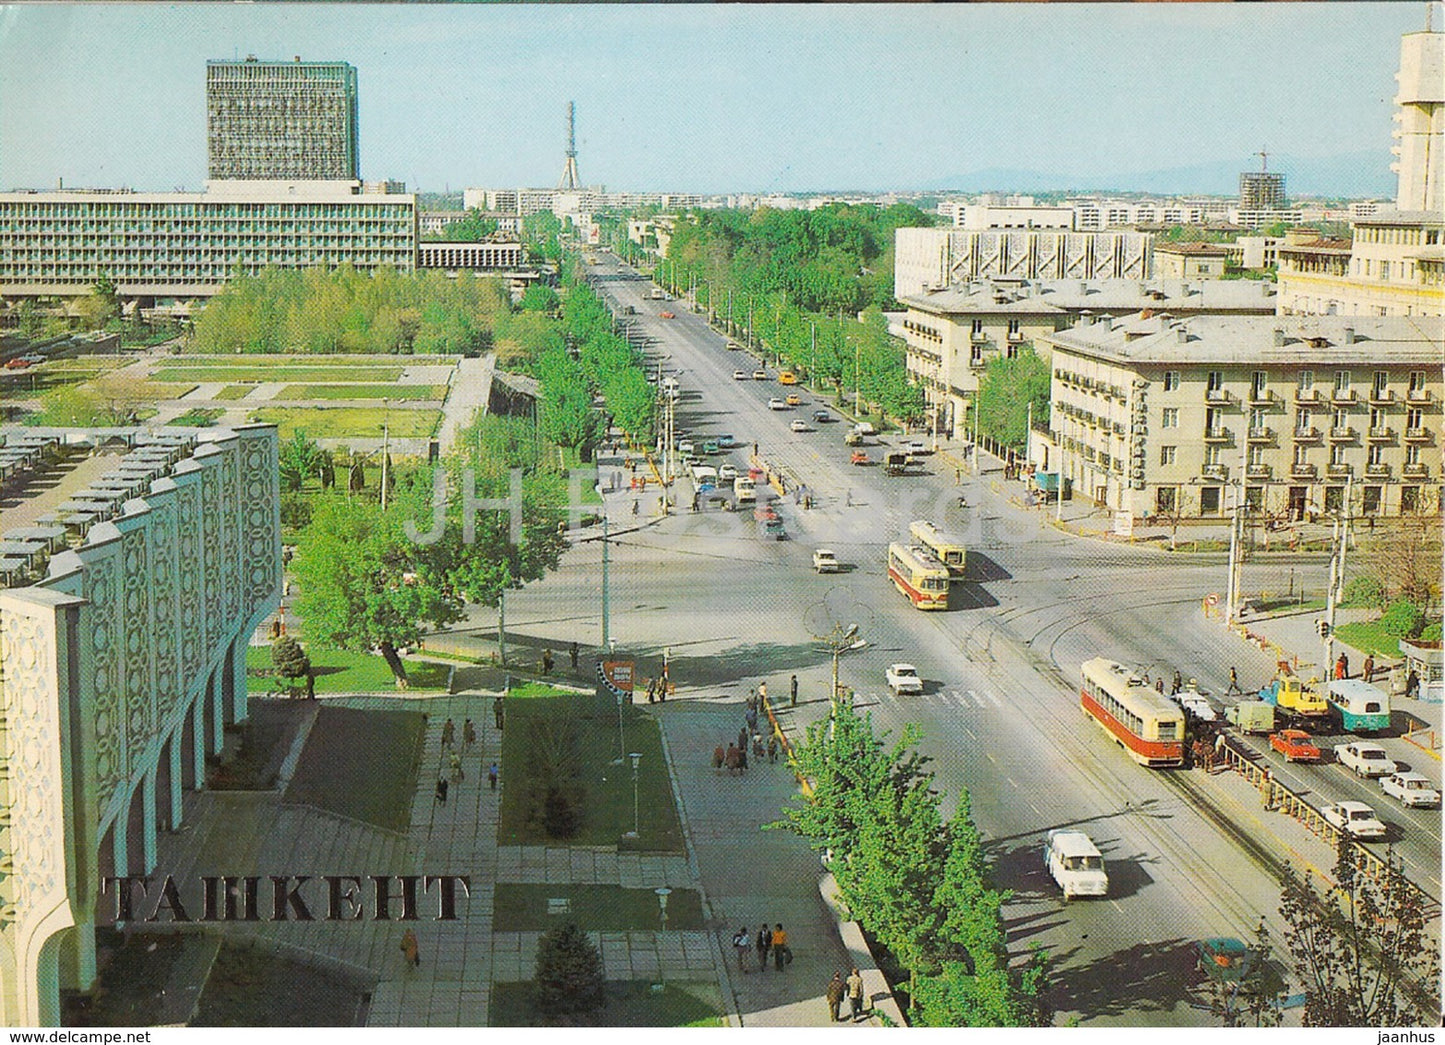 Tashkent - Lenin Prospekt - tram - 1983 - Uzbekistan USSR - unused - JH Postcards